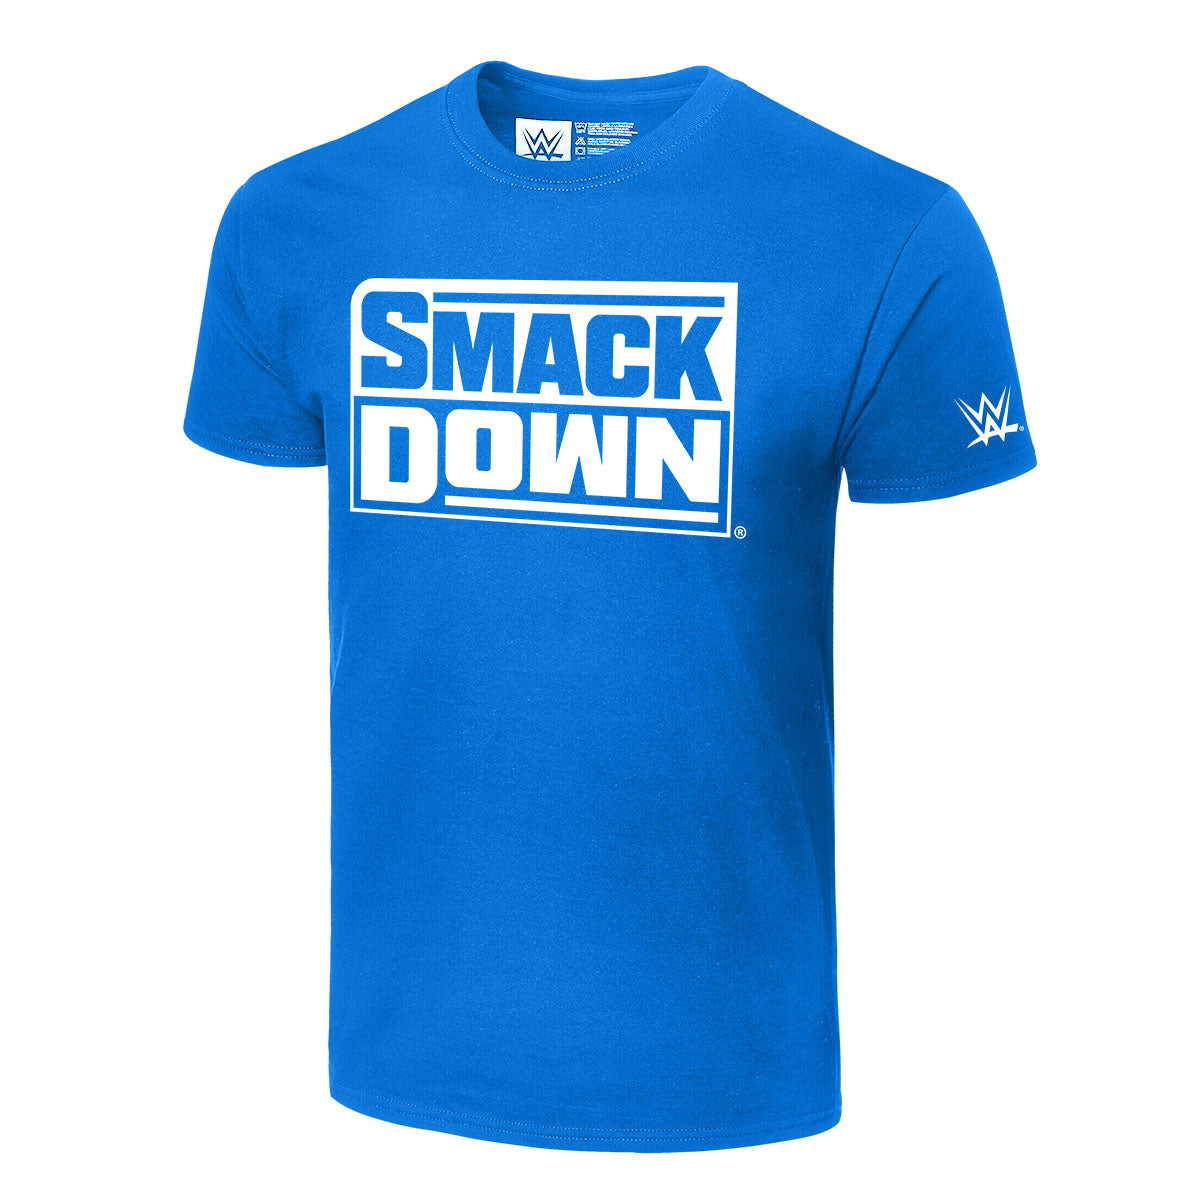 SmackDown 2019 Draft T-Shirt